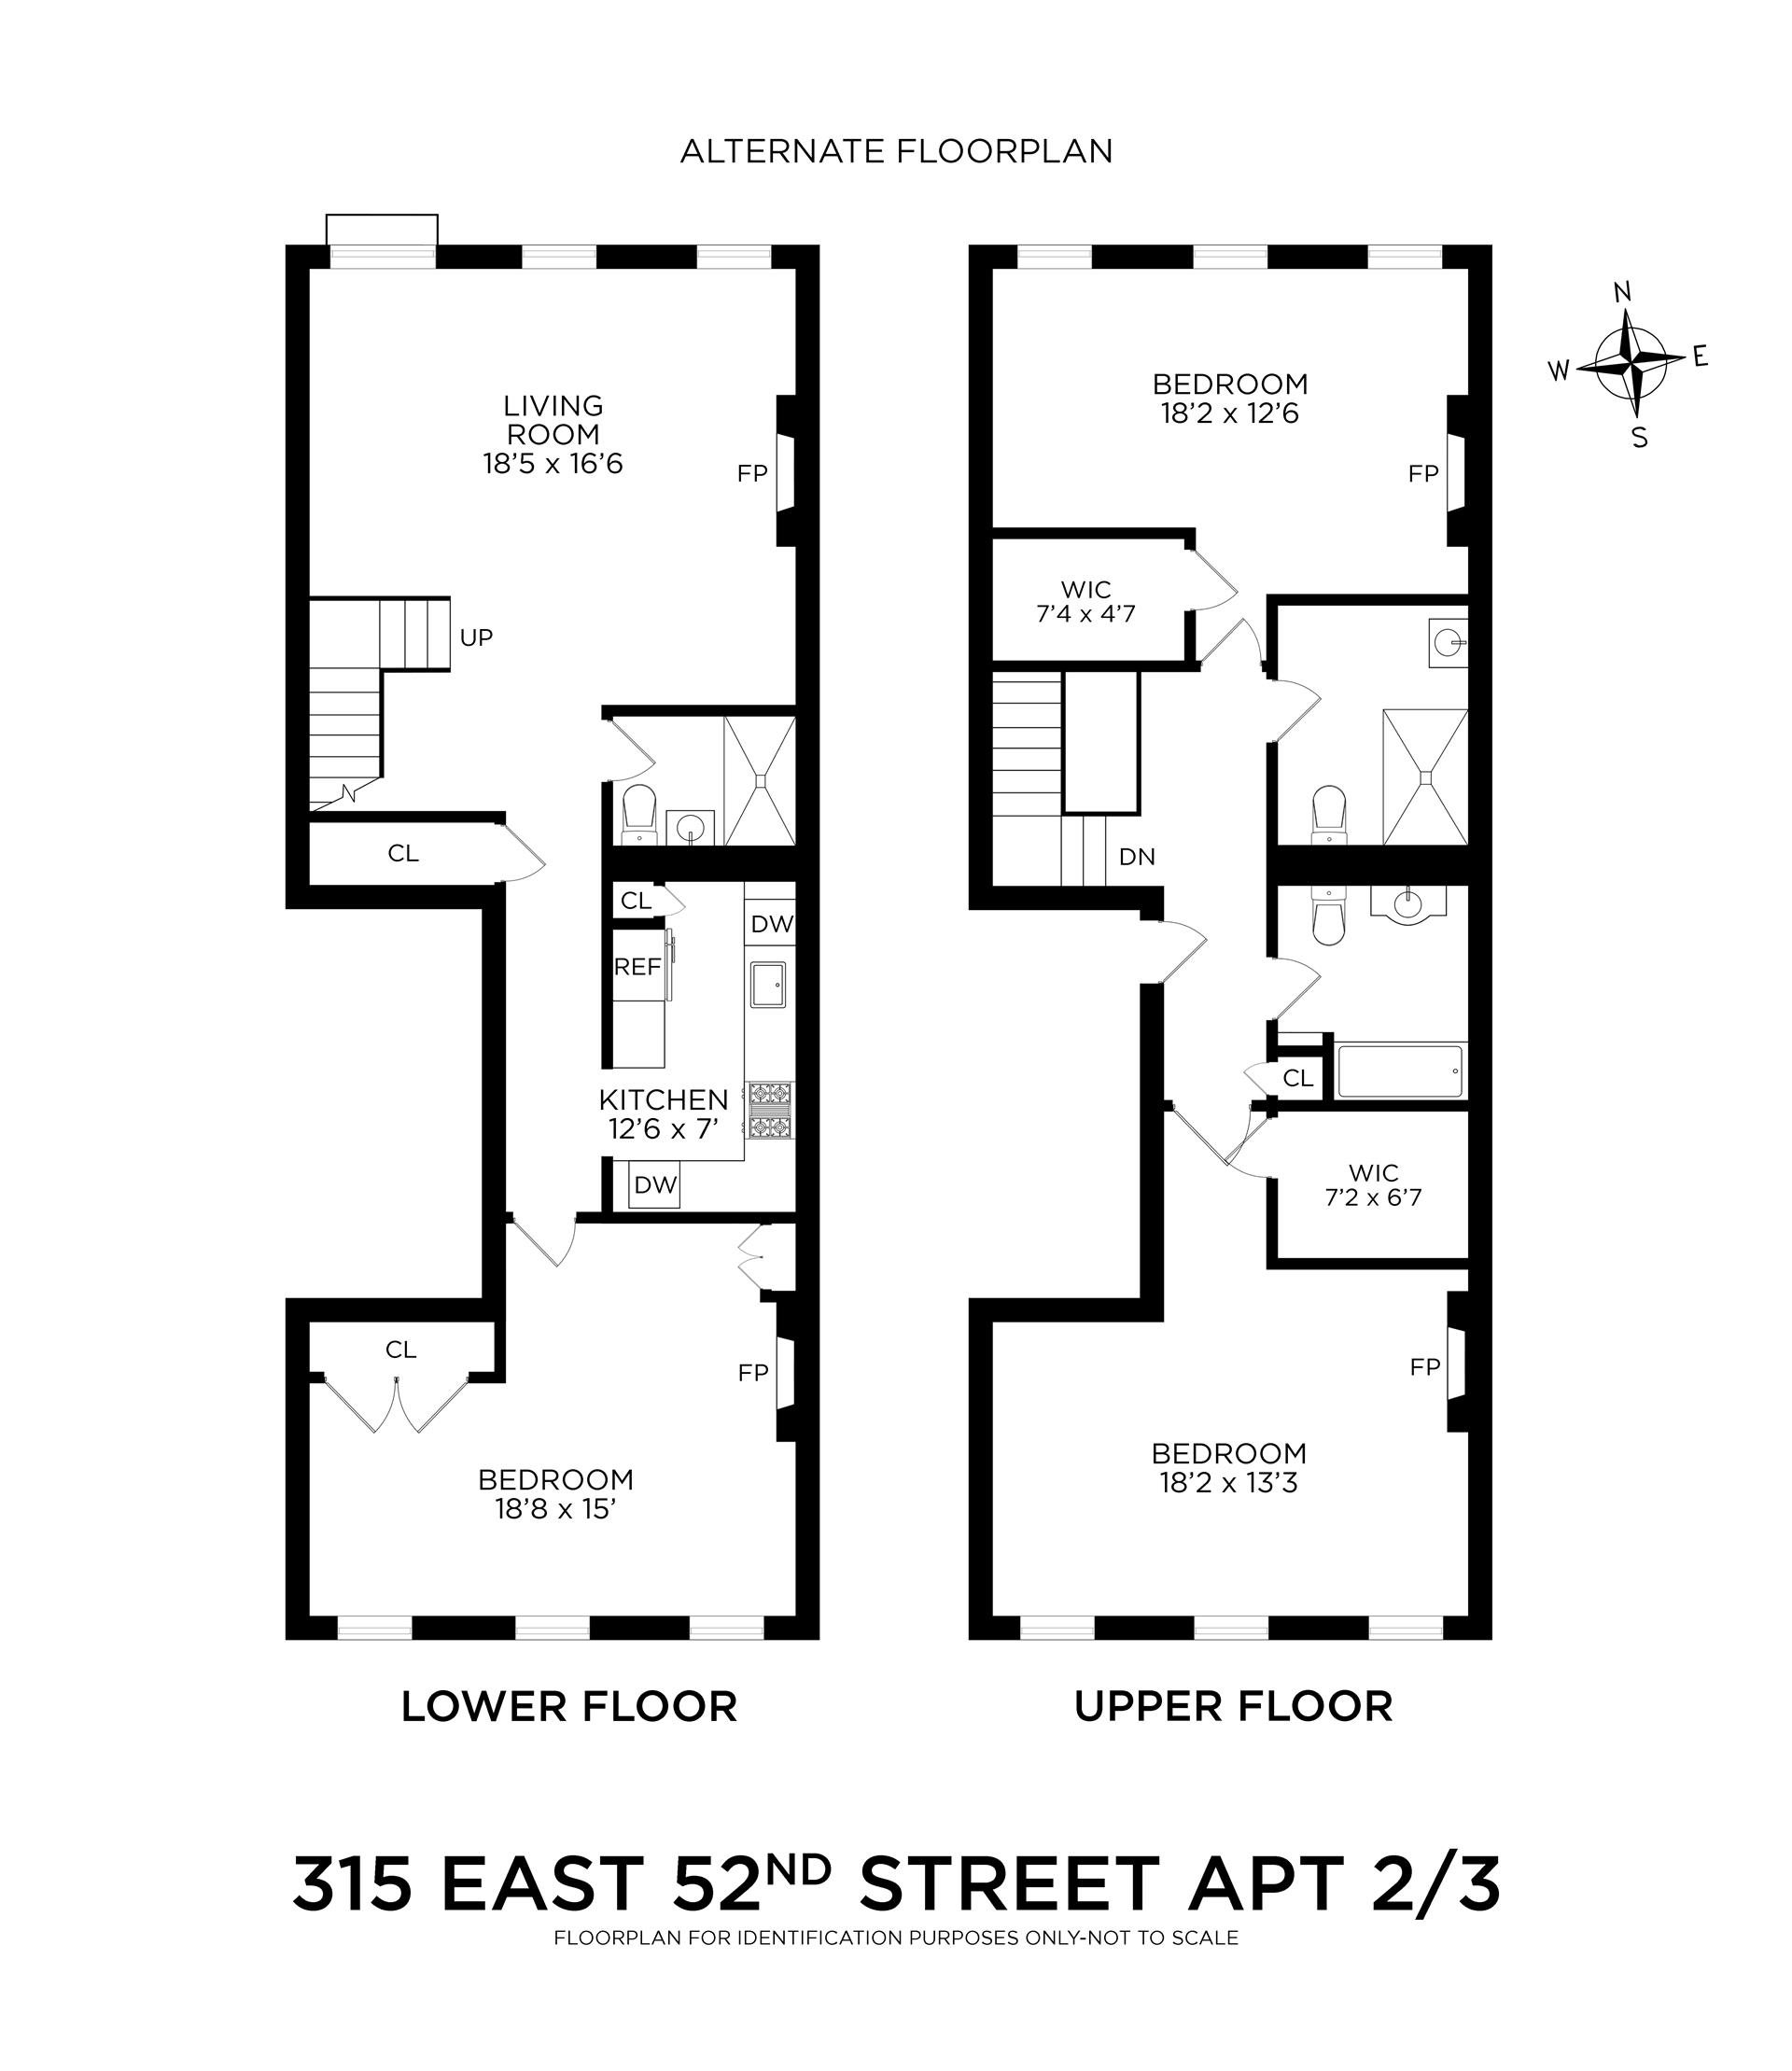 Floorplan for 315 East 52nd Street, DUPLEX